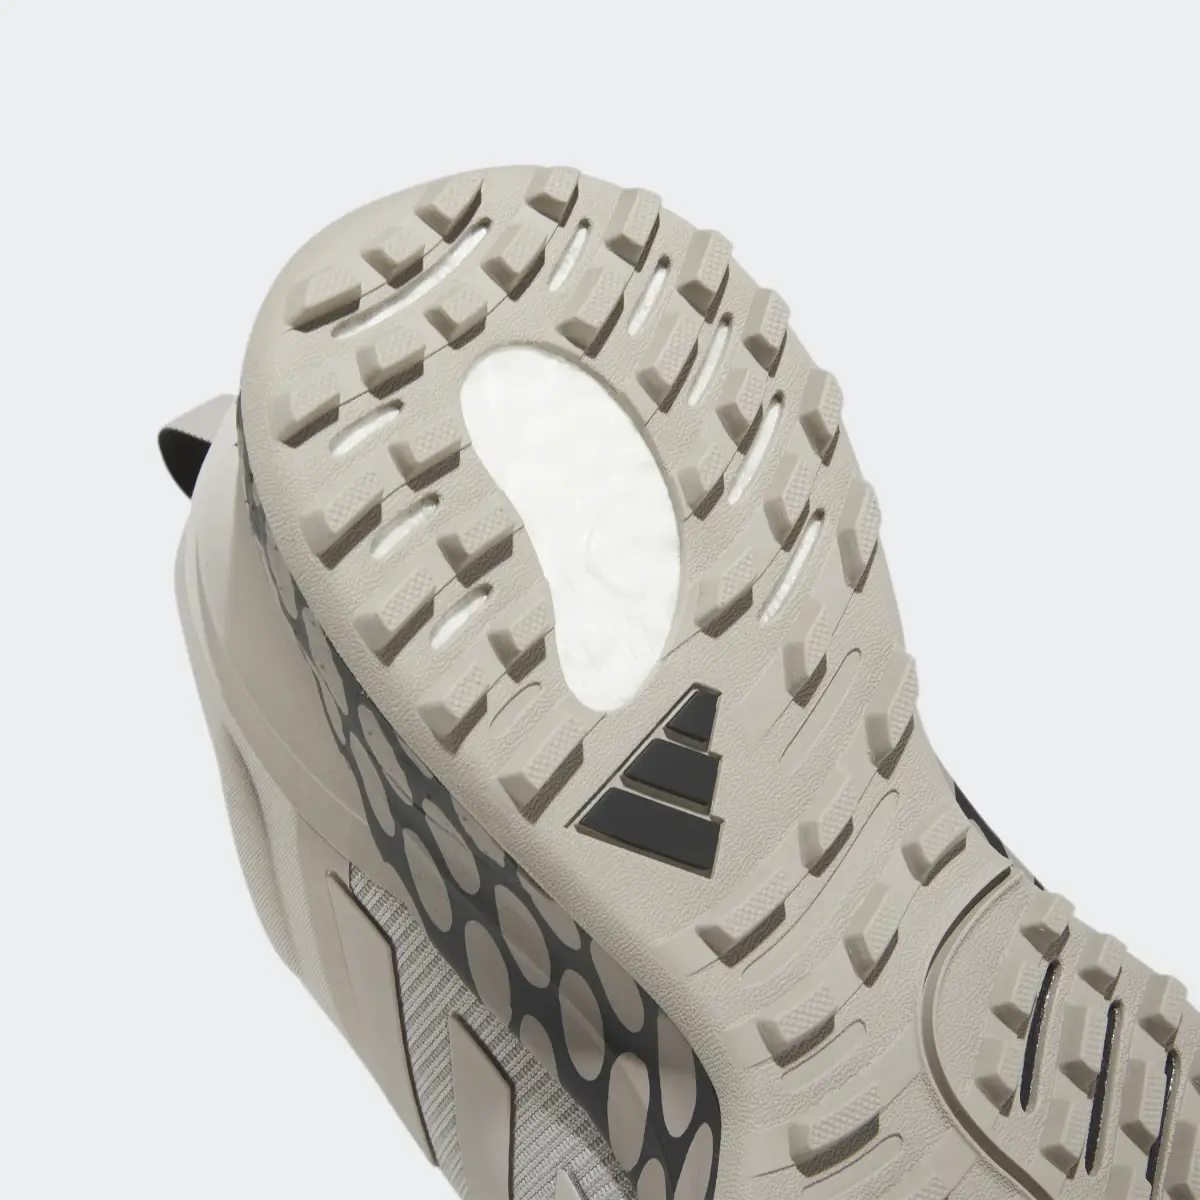 Adidas x Marimekko Zoysia Spikeless Golf Shoes. 3